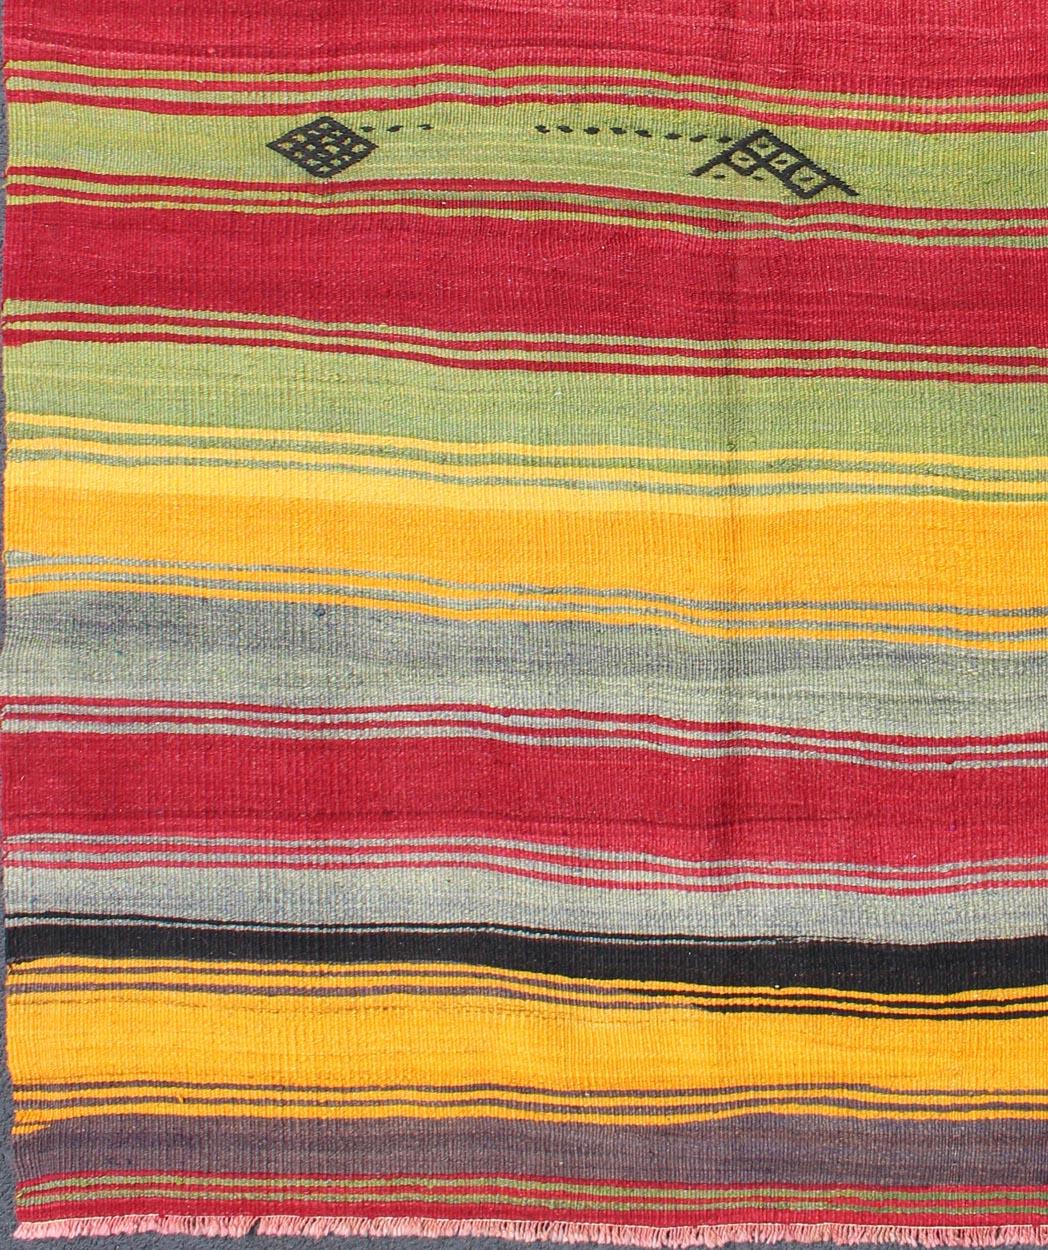 Bright & Colorful Vintage Turkish Kilim Rug in Stripes Design, Keivan Woven Arts/rug/TU-MTU-95043, country of origin / type: Turkey / Kilim, circa mid-20th century, bright color Kilim, Vivid colors vintage Kilim

Measures: 5 x 7'1. 

Featuring a